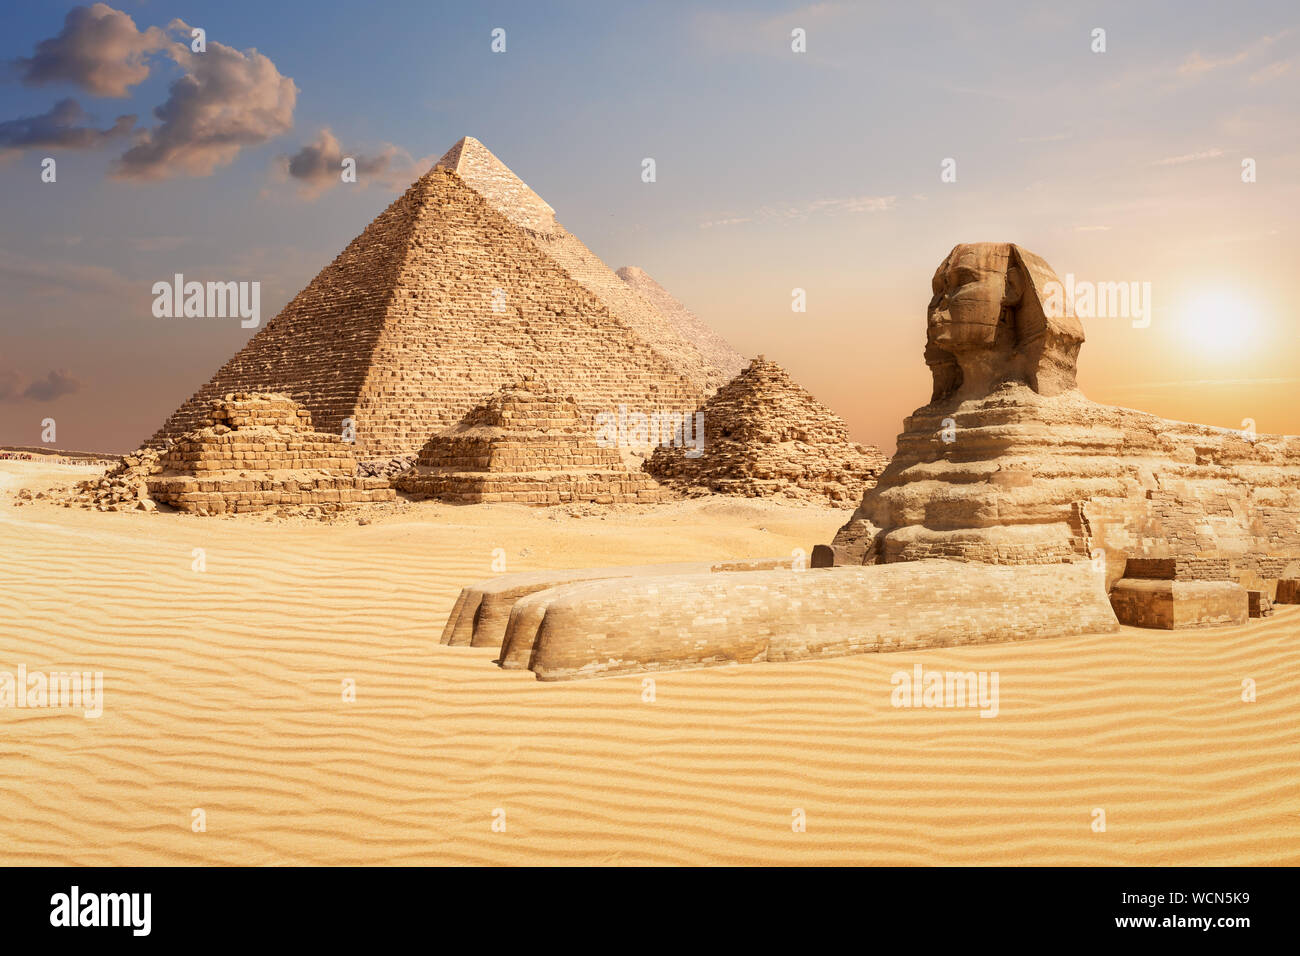 Las pirámides y la esfinge de Giza, mundialmente famoso paisaje histórico Foto de stock